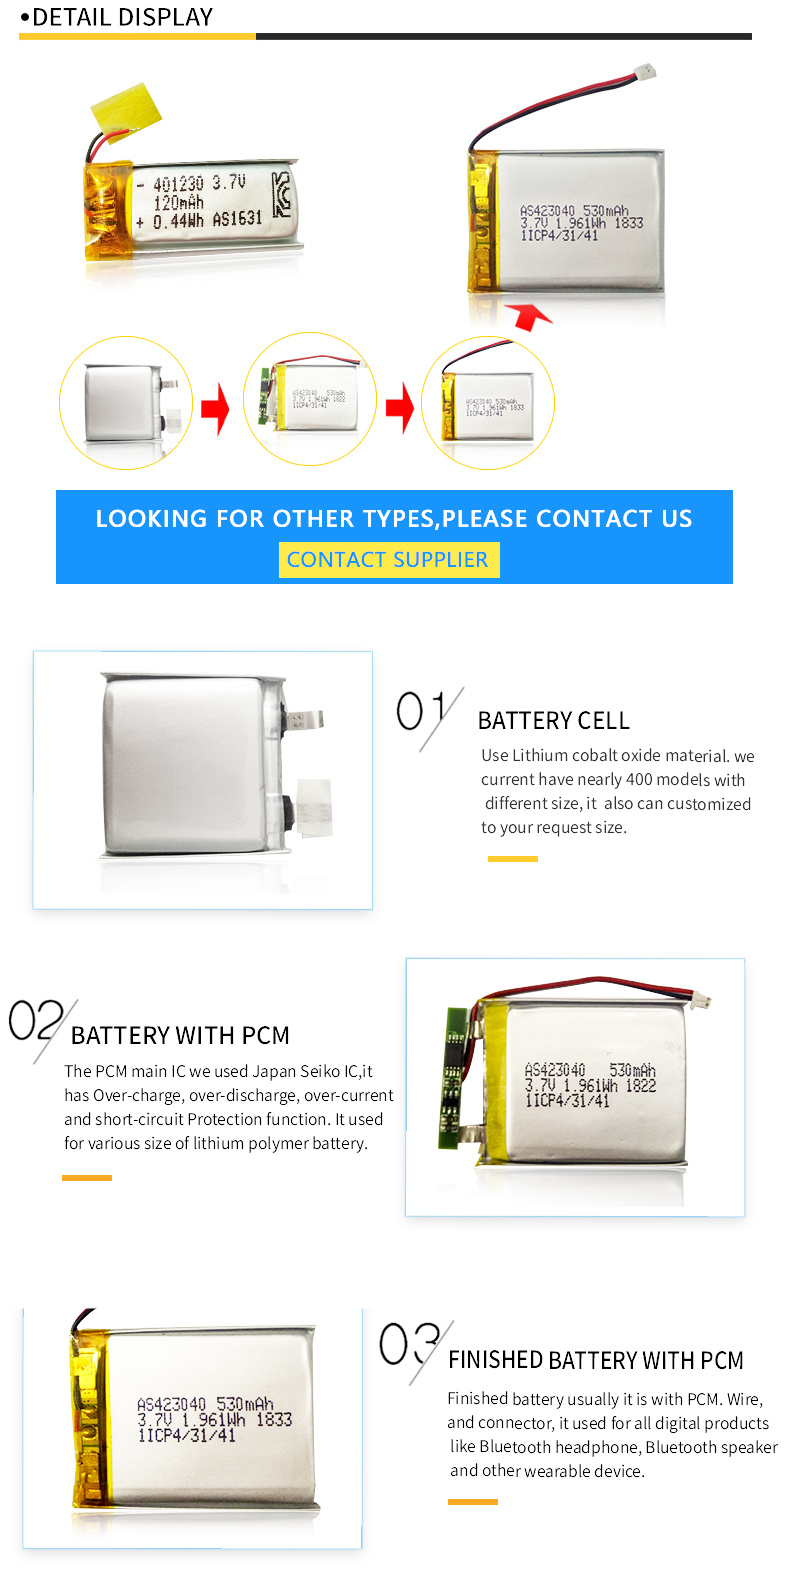 501235 160mAh Lithium Polymer Battery for Medical Equipment, Beauty Equipment